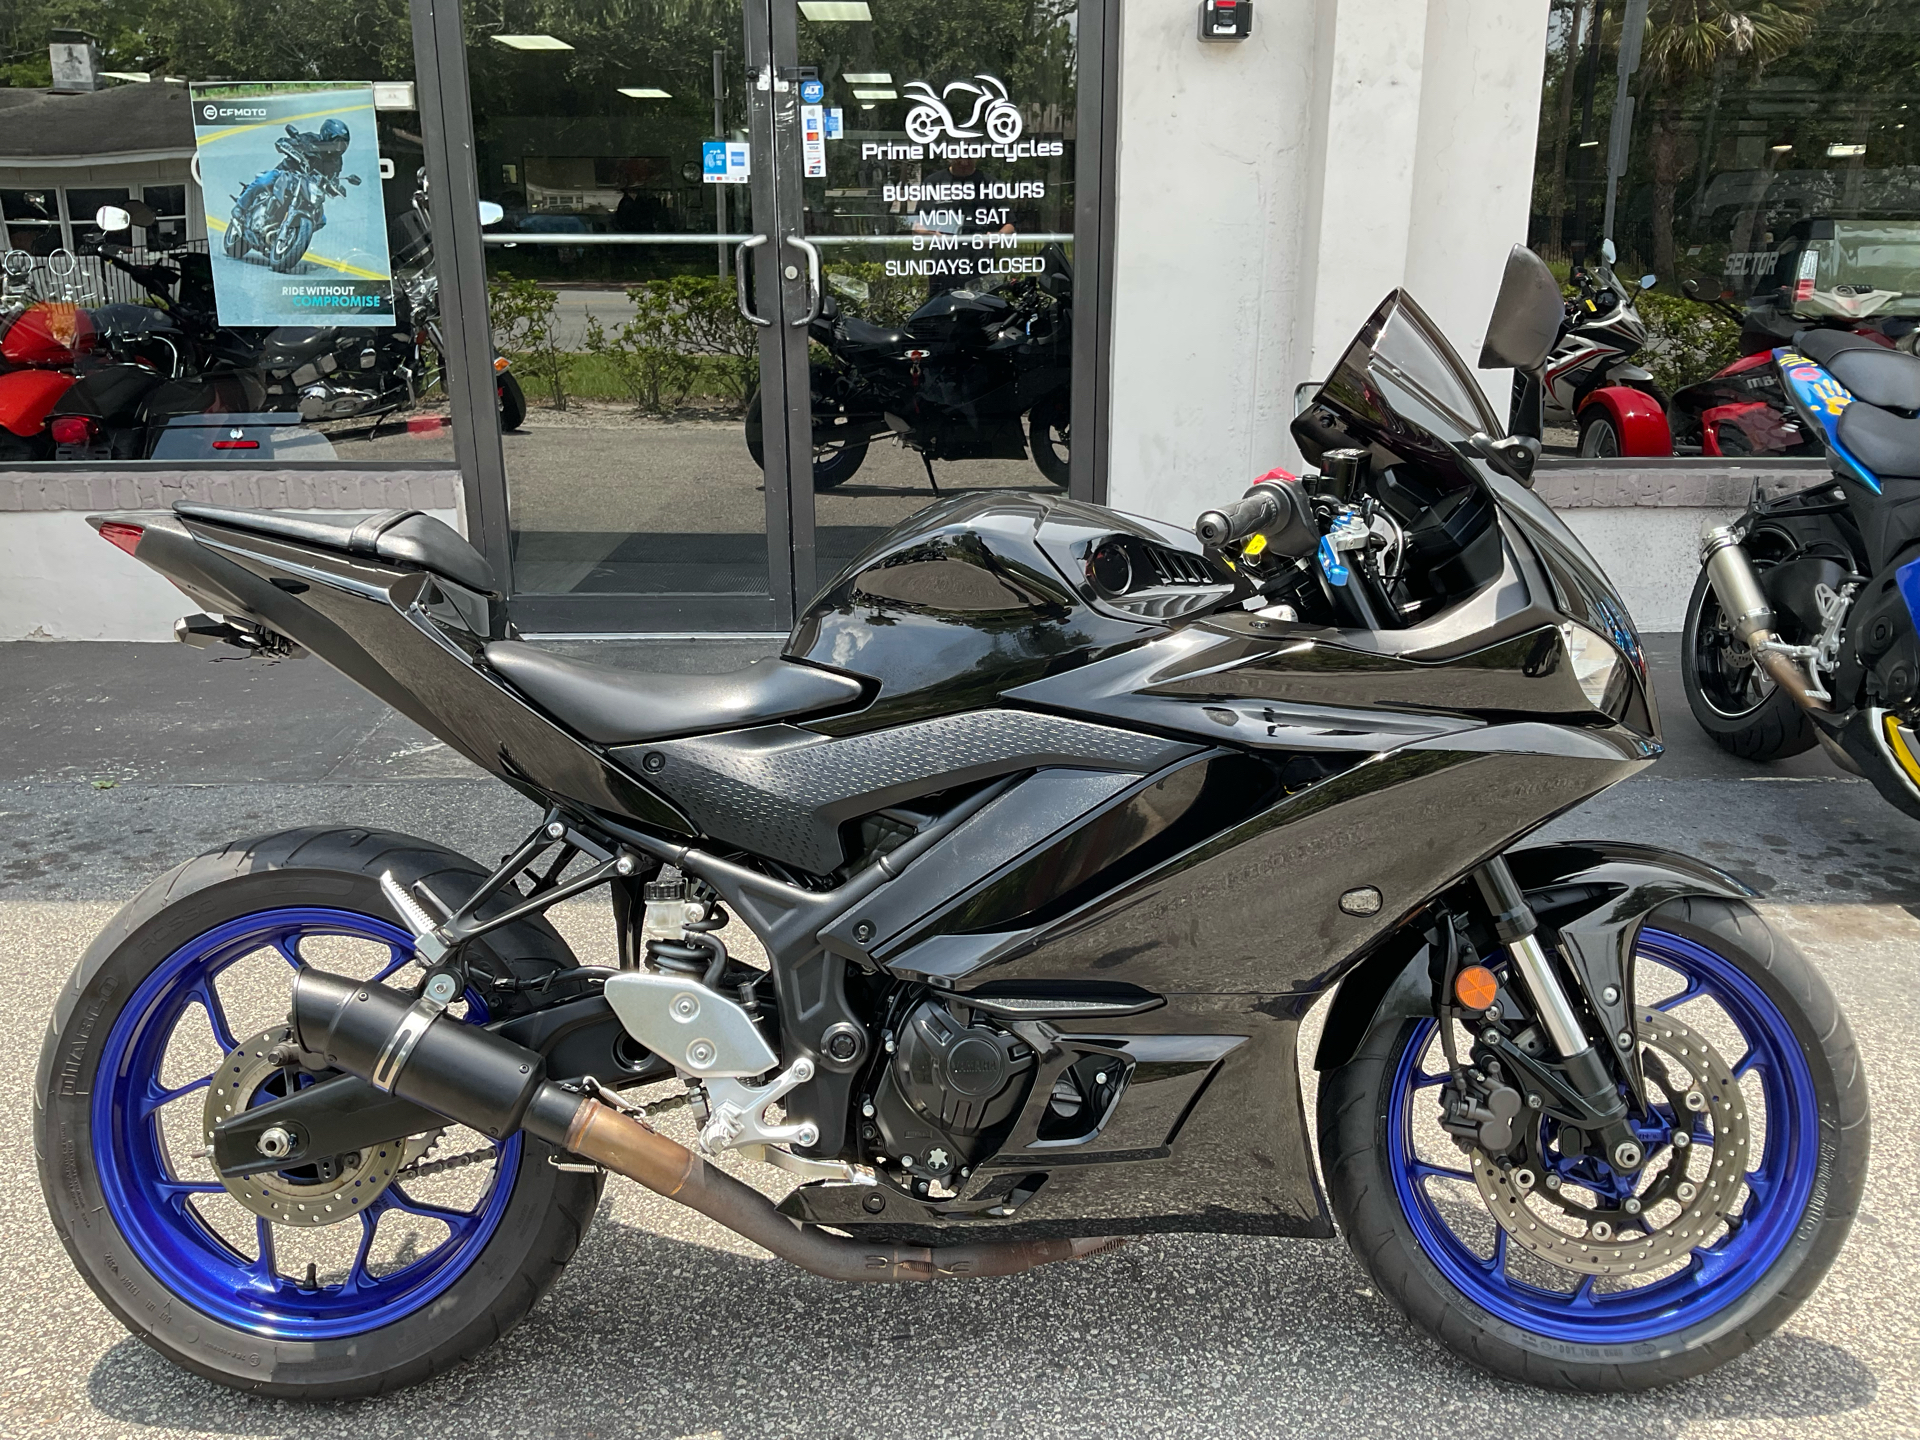 2020 Yamaha YZF-R3 ABS in Sanford, Florida - Photo 7